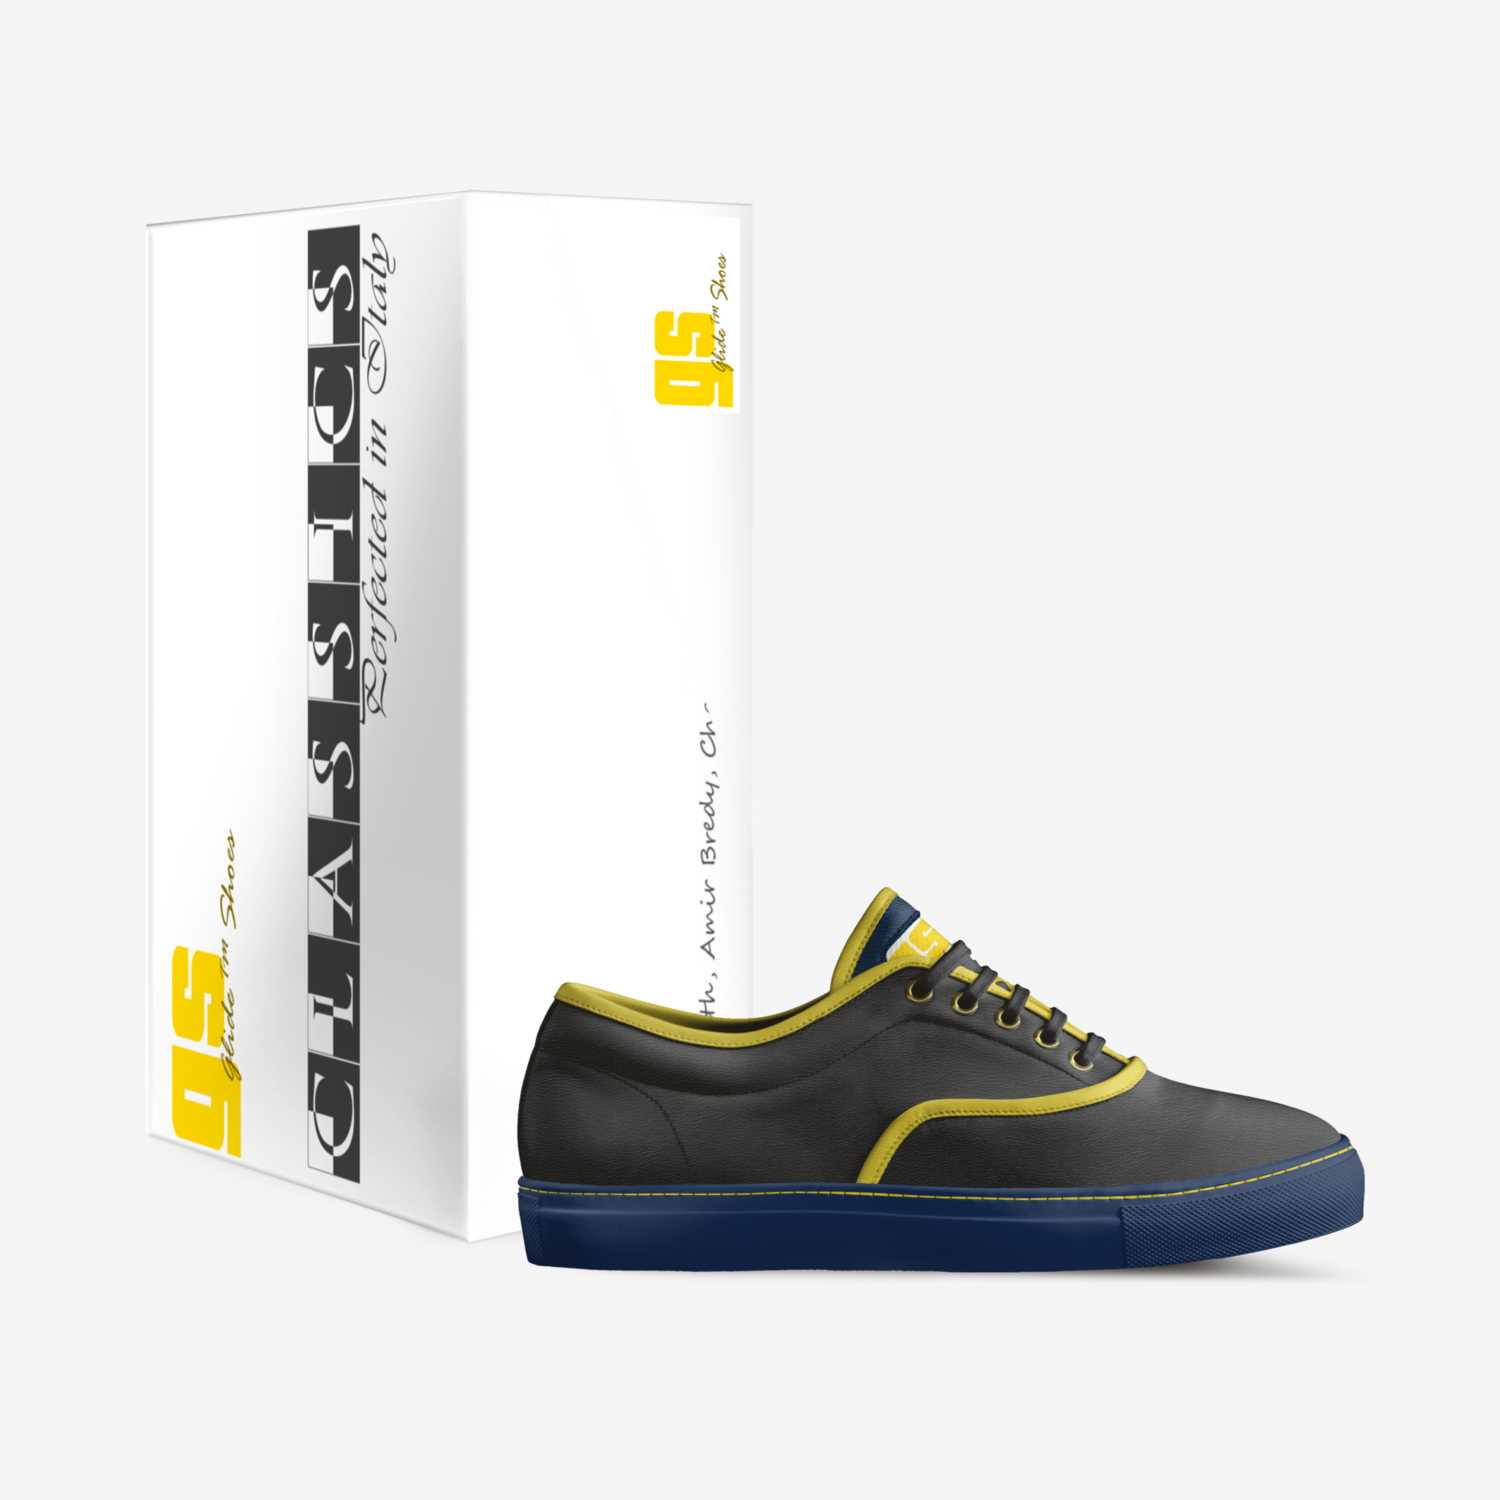 Glide | A Custom Shoe concept Adam Smith